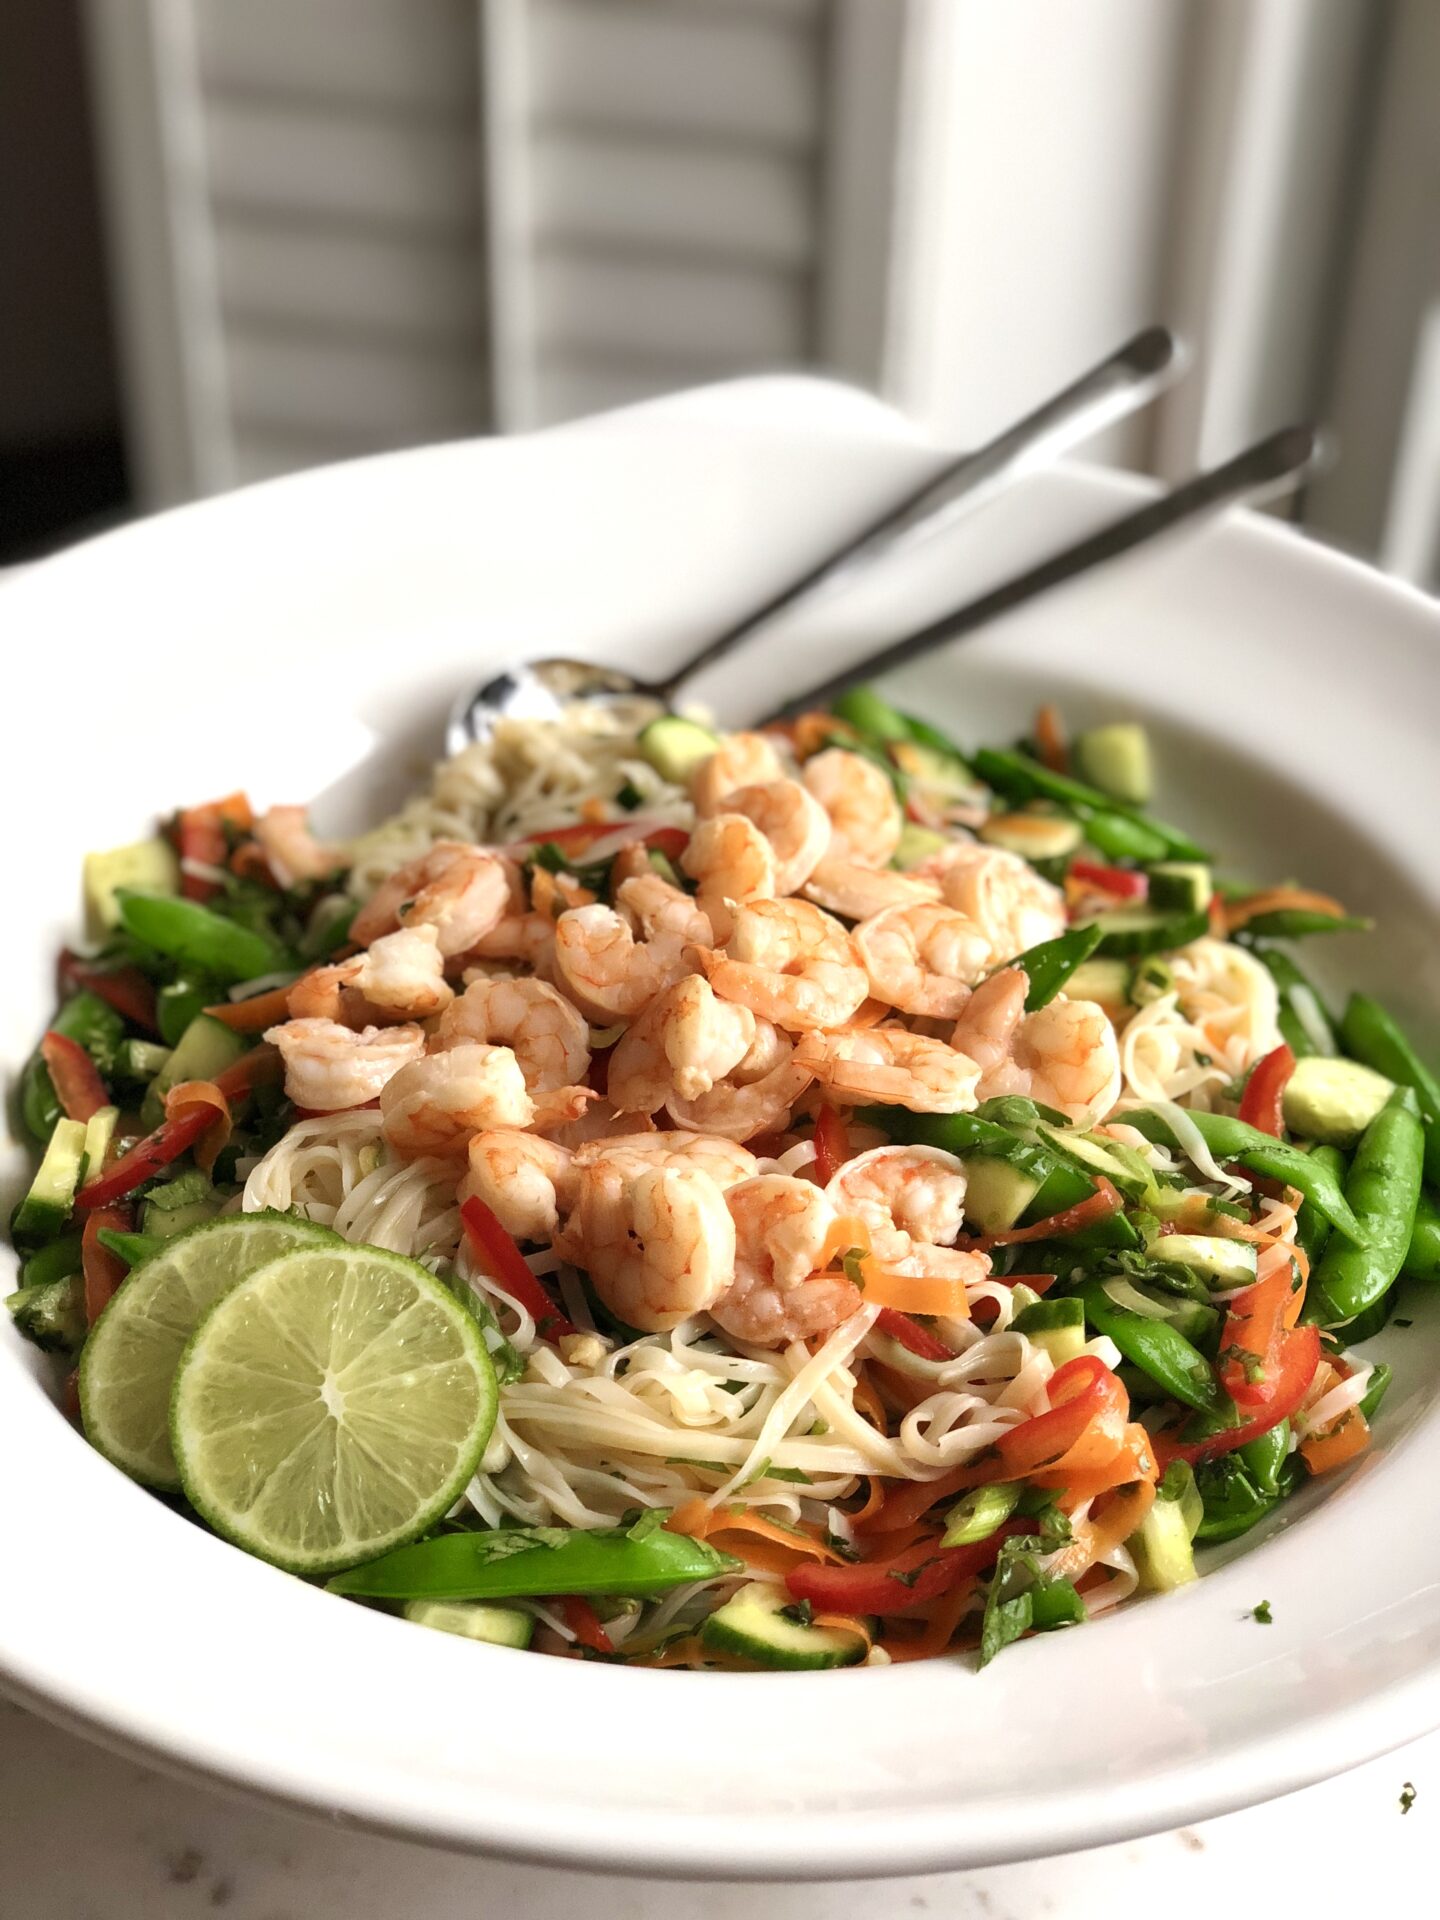 Serving bowl of Thai noodle salad with vegetables and shrimp